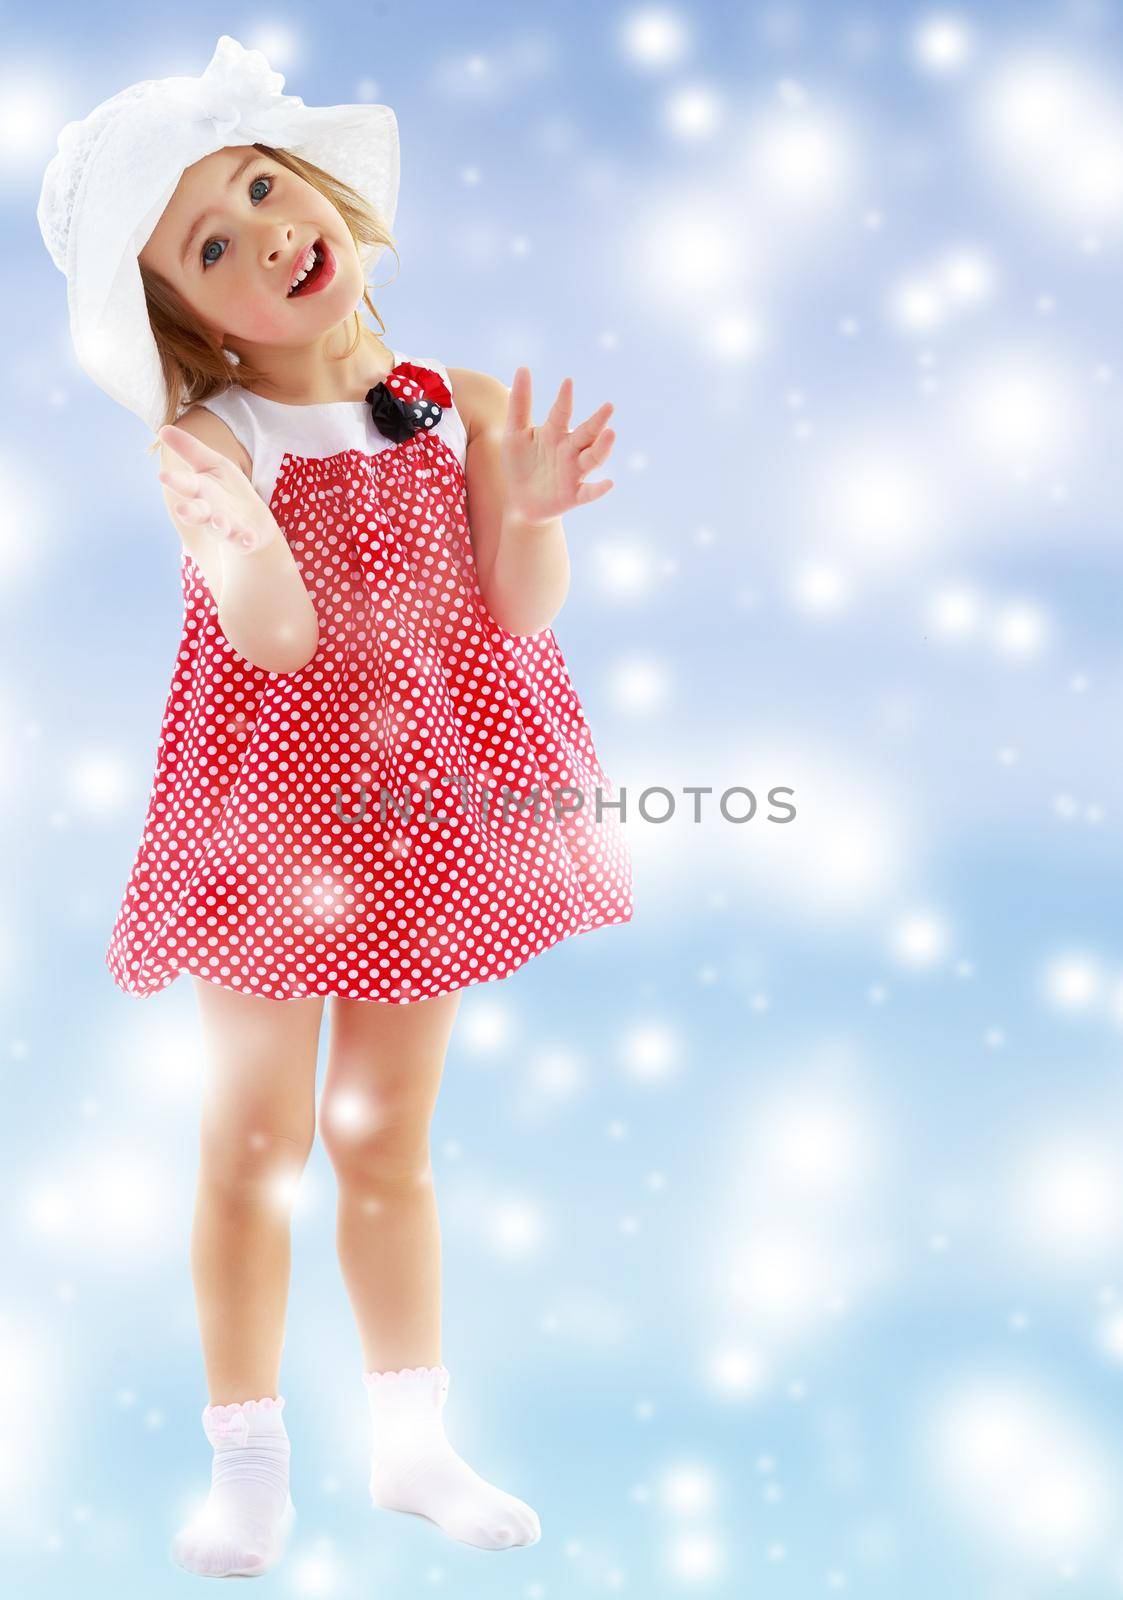 The little girl claps by kolesnikov_studio